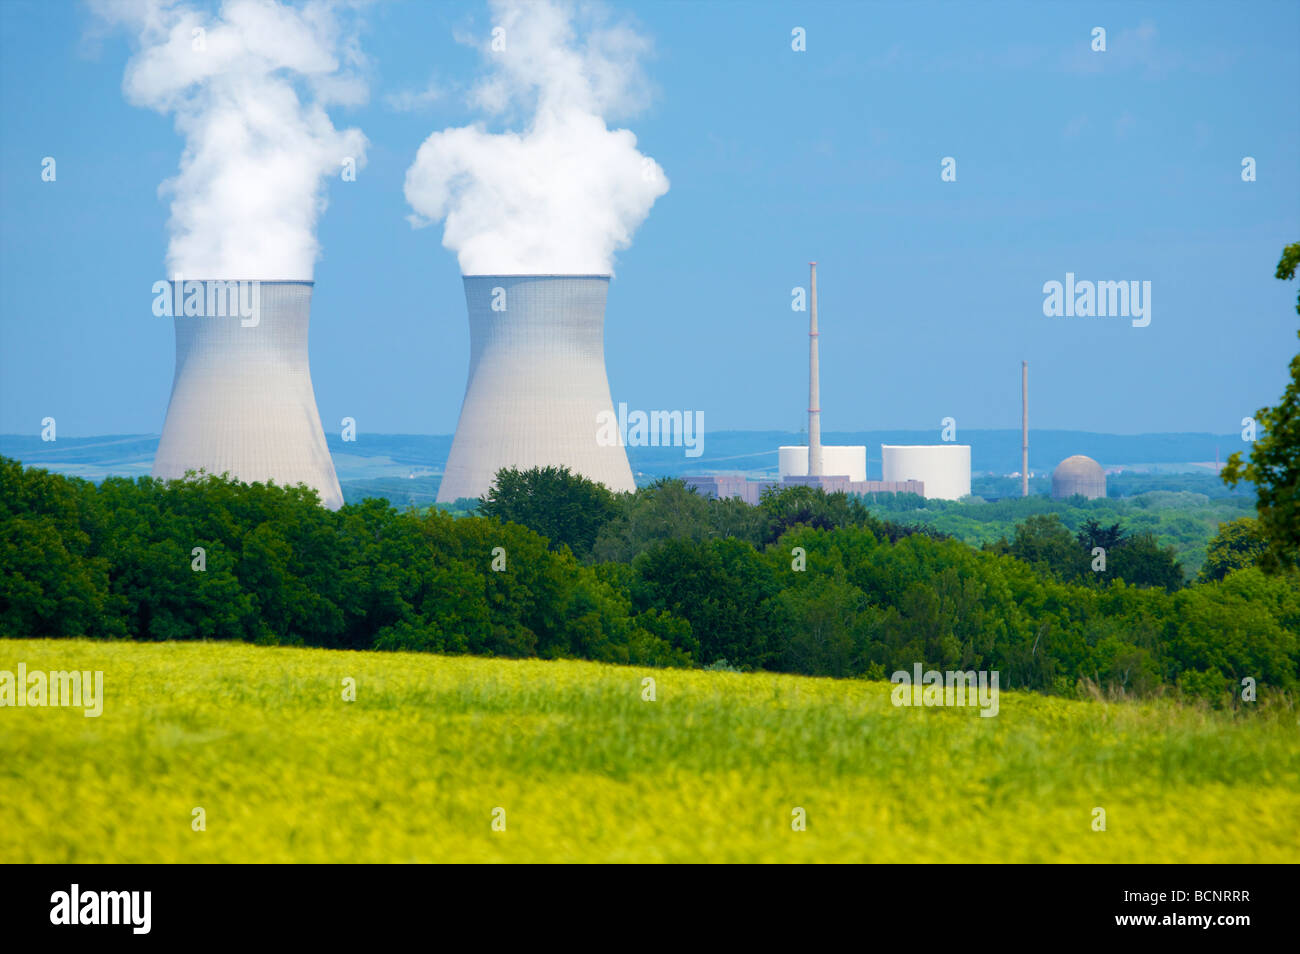 Gundremmingen centrale nucleare in Baviera, Germania. Attivo 2 reattori BWR. La Kernkraftwerk Gundremmingen, Bayern, Deutschland. Foto Stock